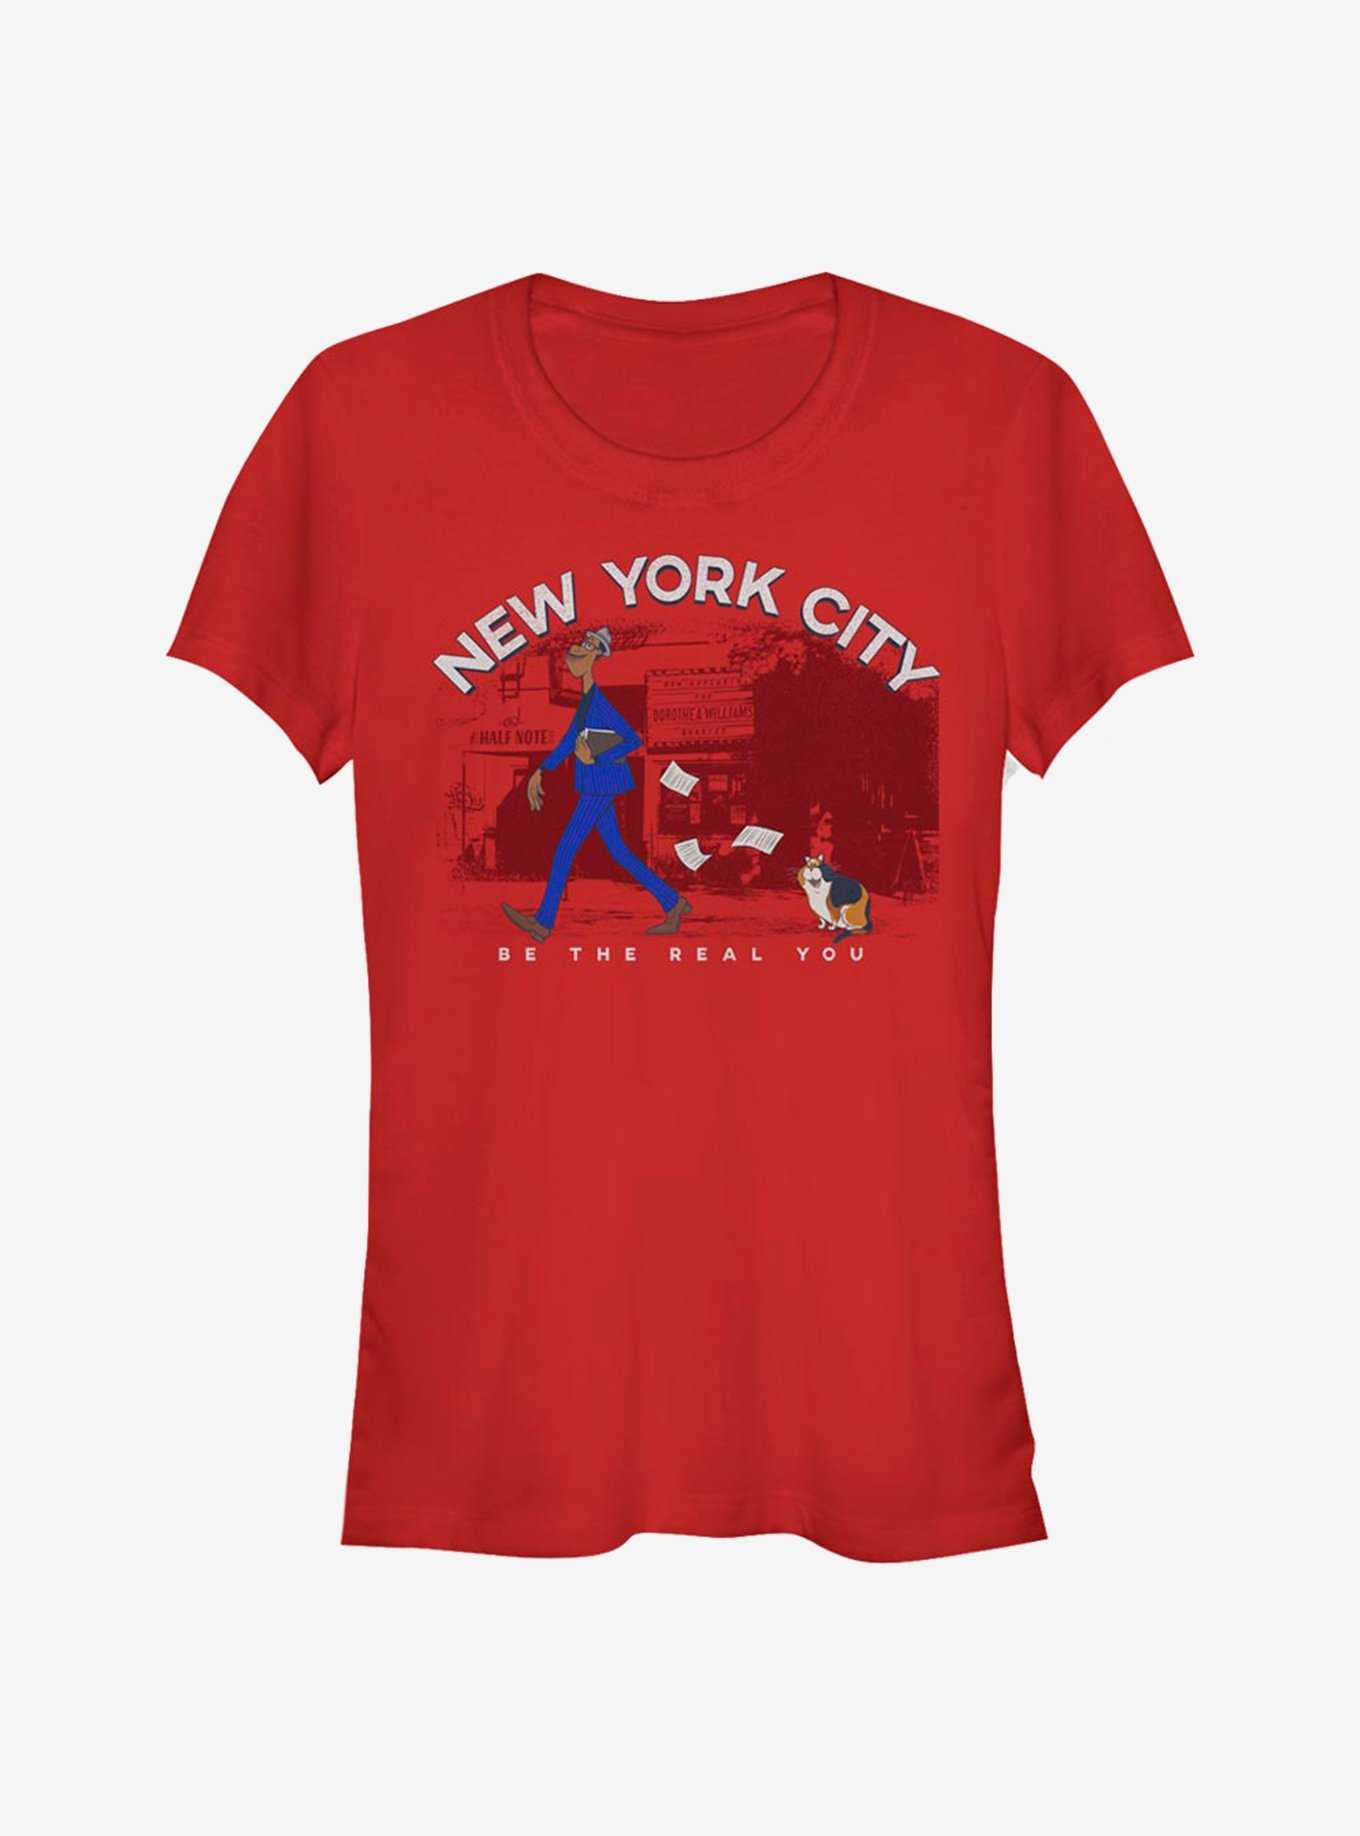 Disney Pixar Soul Be You NYC Girls T-Shirt, , hi-res